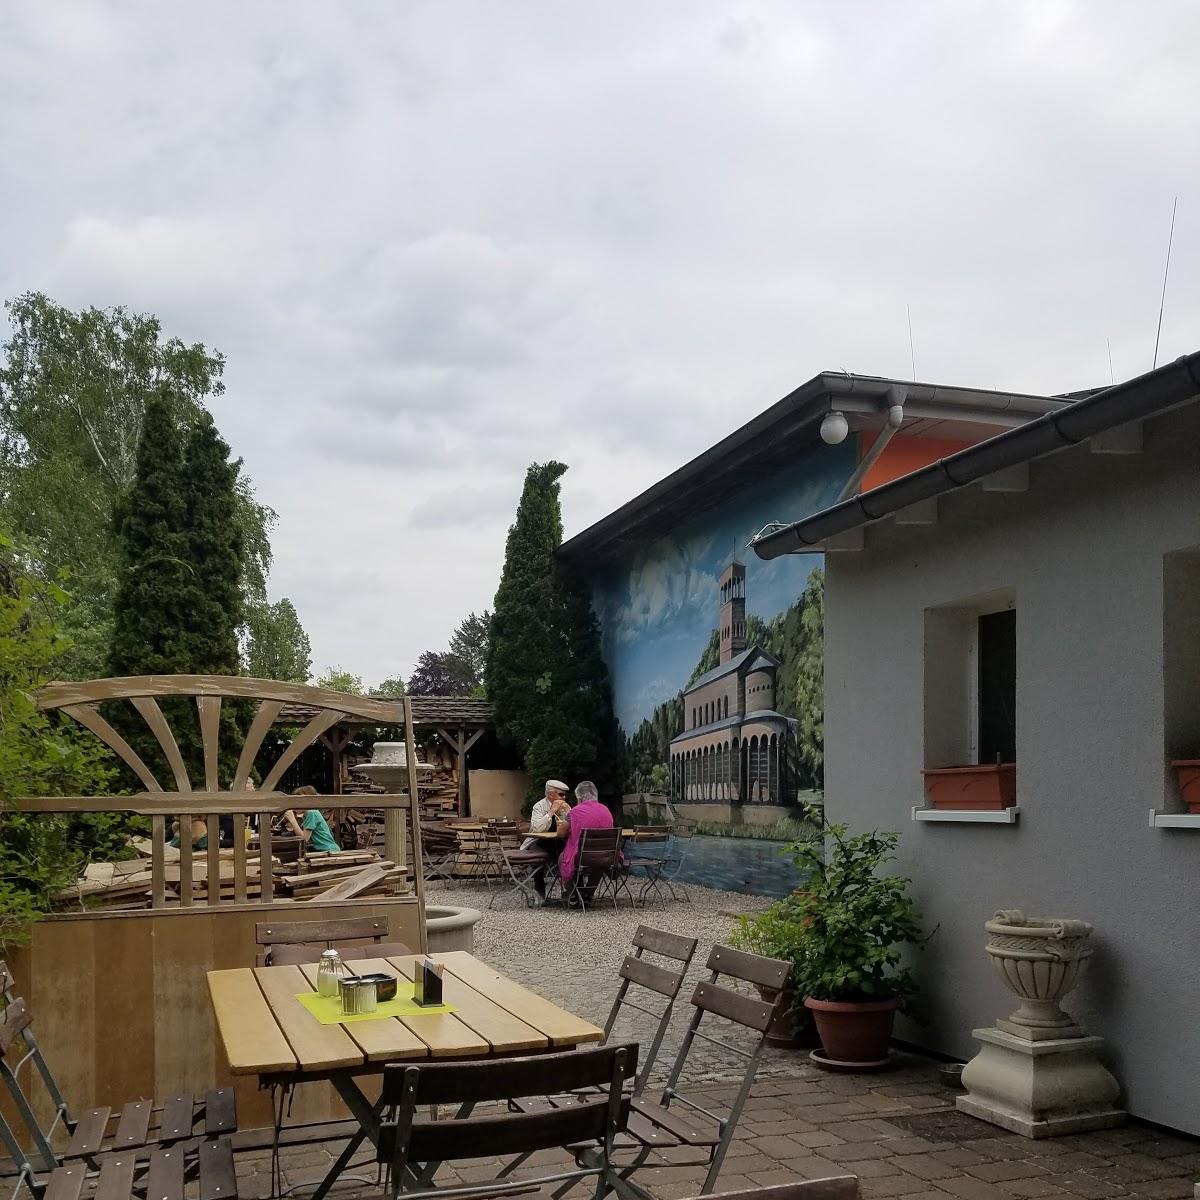 Restaurant "Rittersaal zu Sacrow" in Potsdam